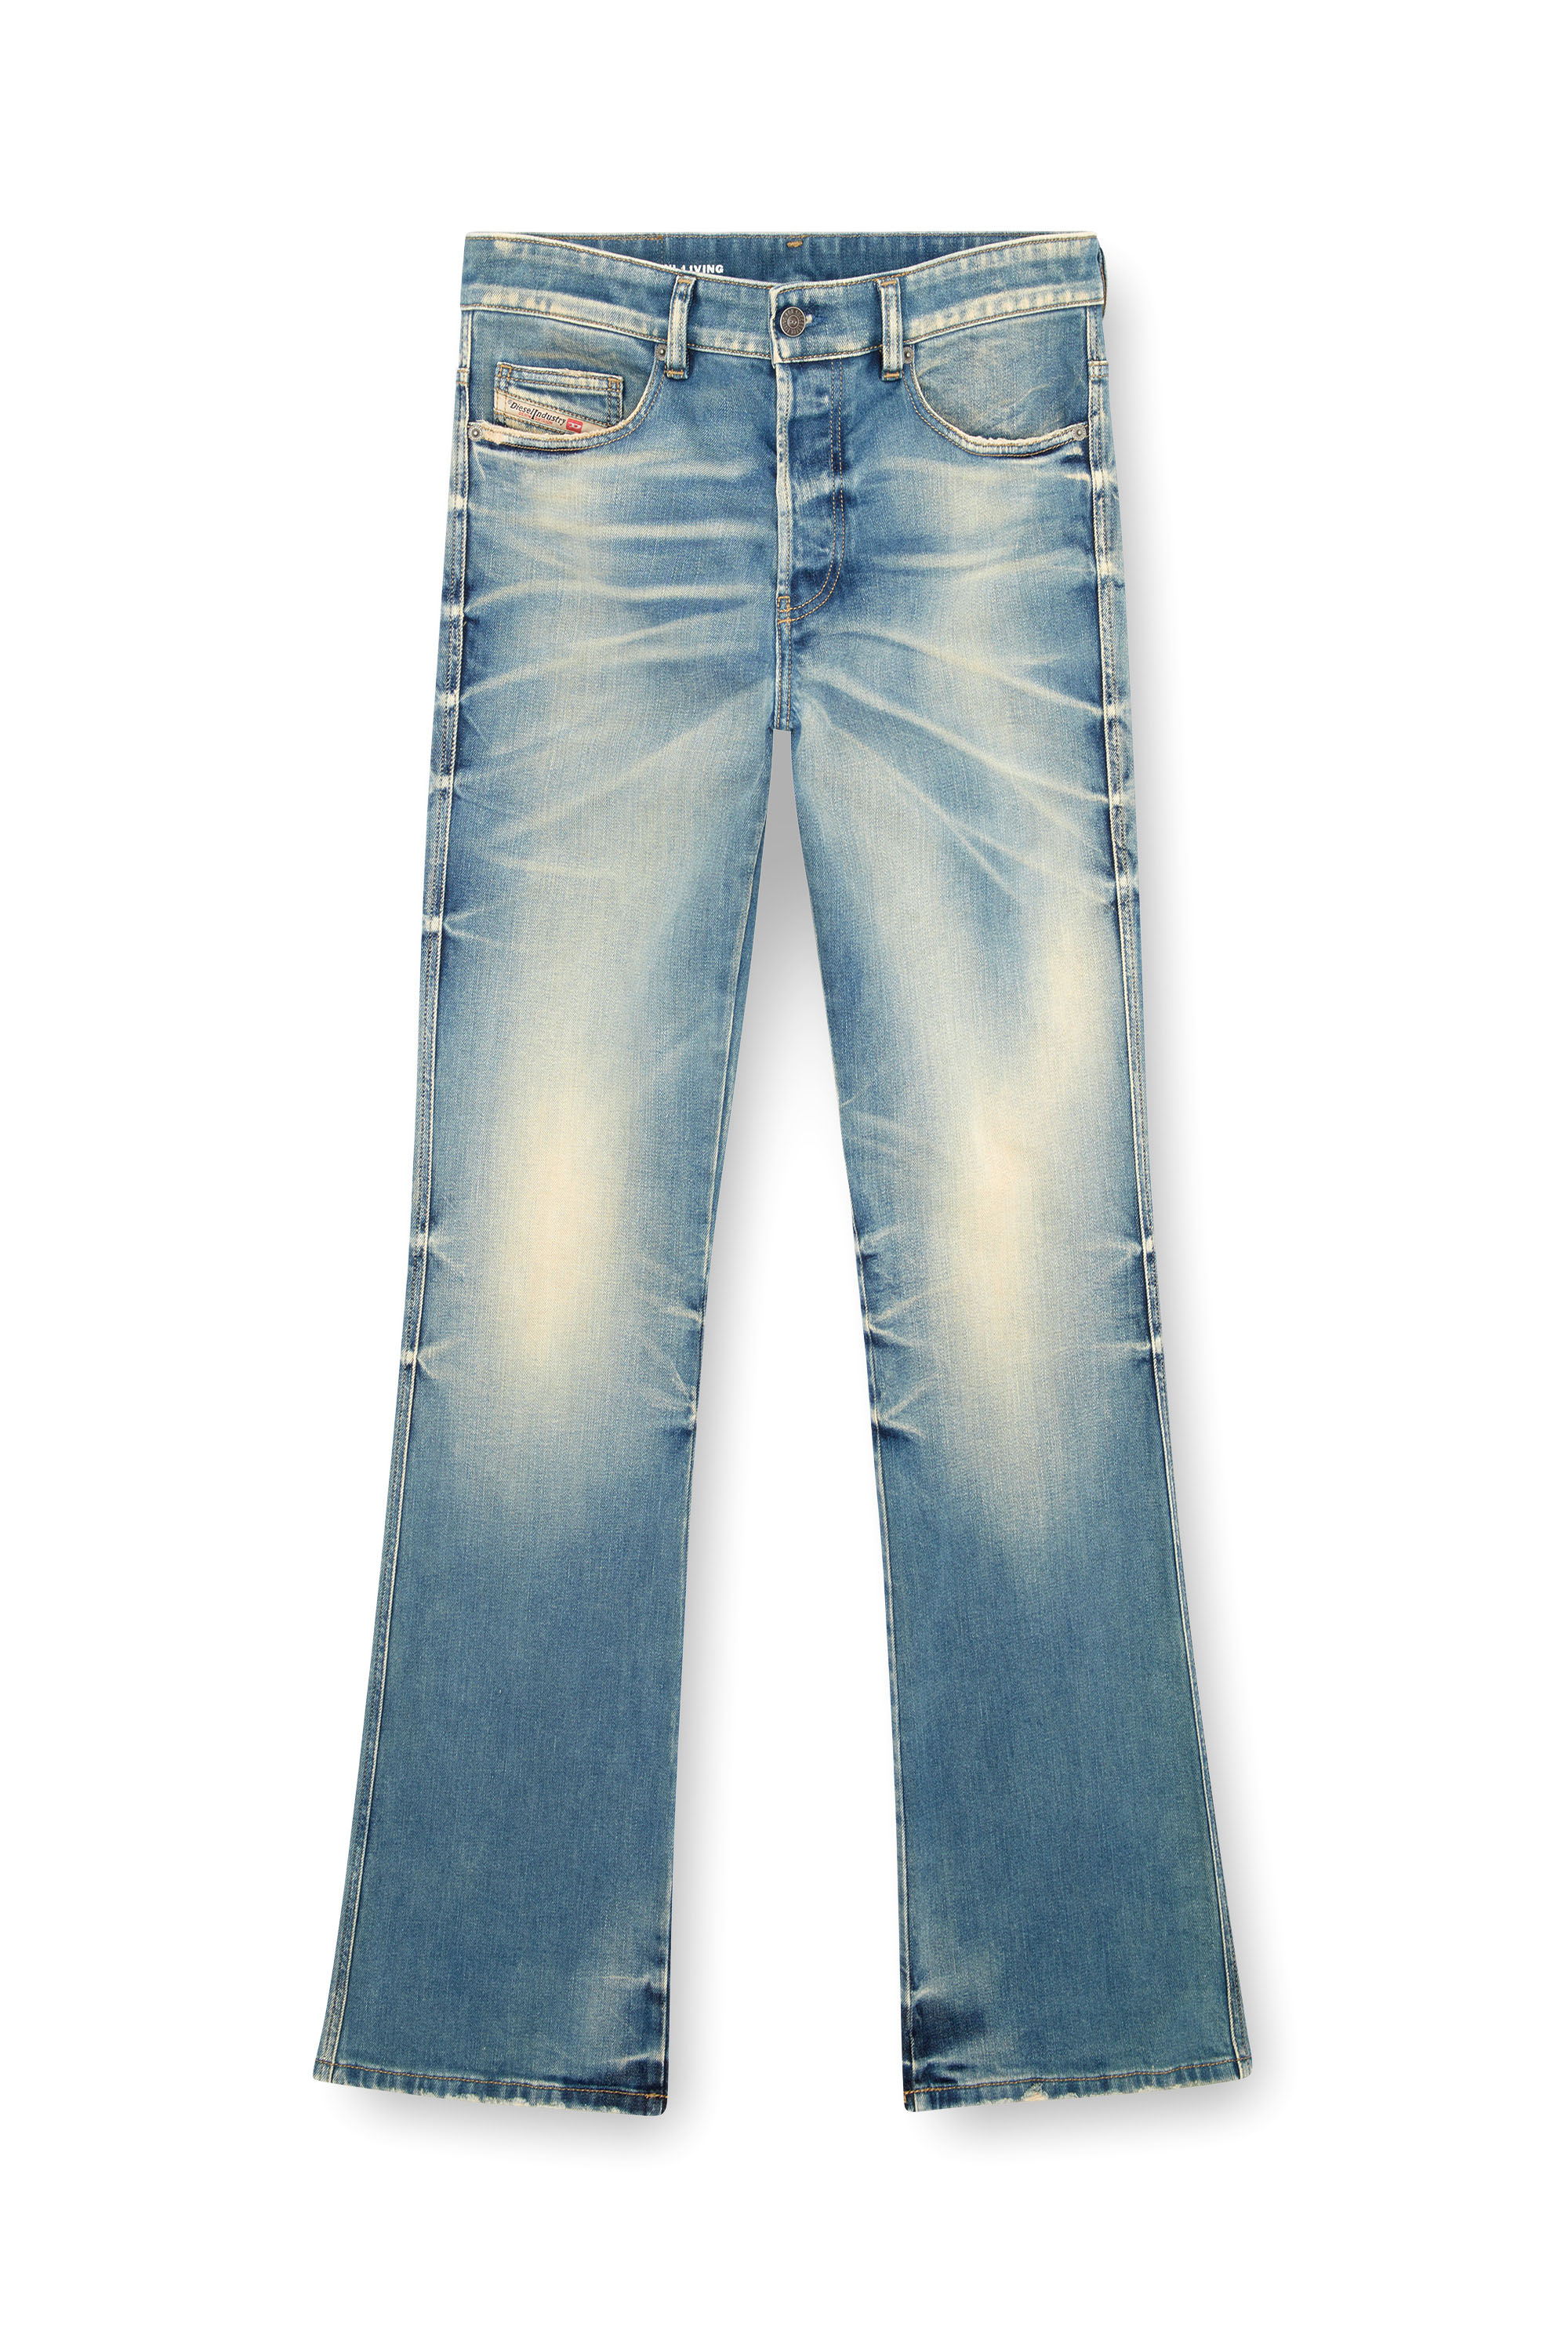 Diesel - Bootcut Jeans 1998 D-Buck 09J62, Hombre Bootcut Jeans - 1998 D-Buck in Azul marino - Image 3